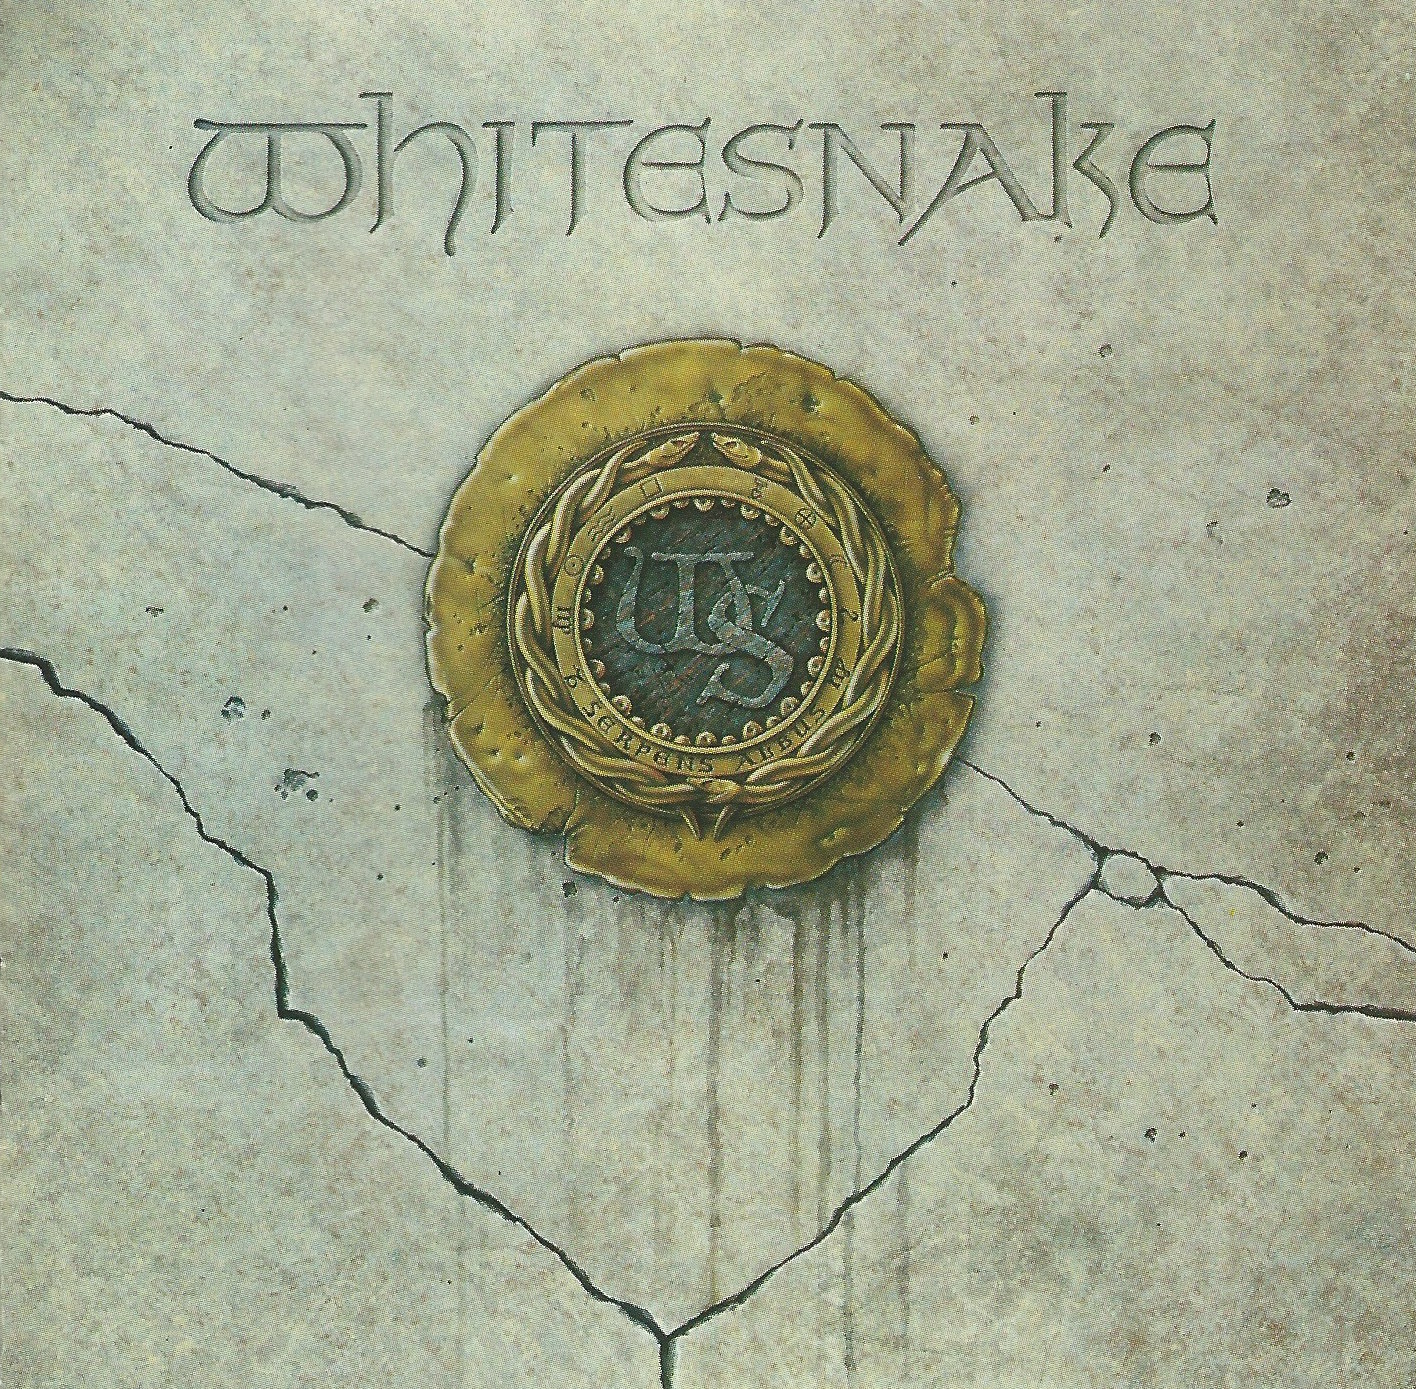 Whitesnake, альбом, исполнитель, Whitesnake, автор, треклист, музыканты.